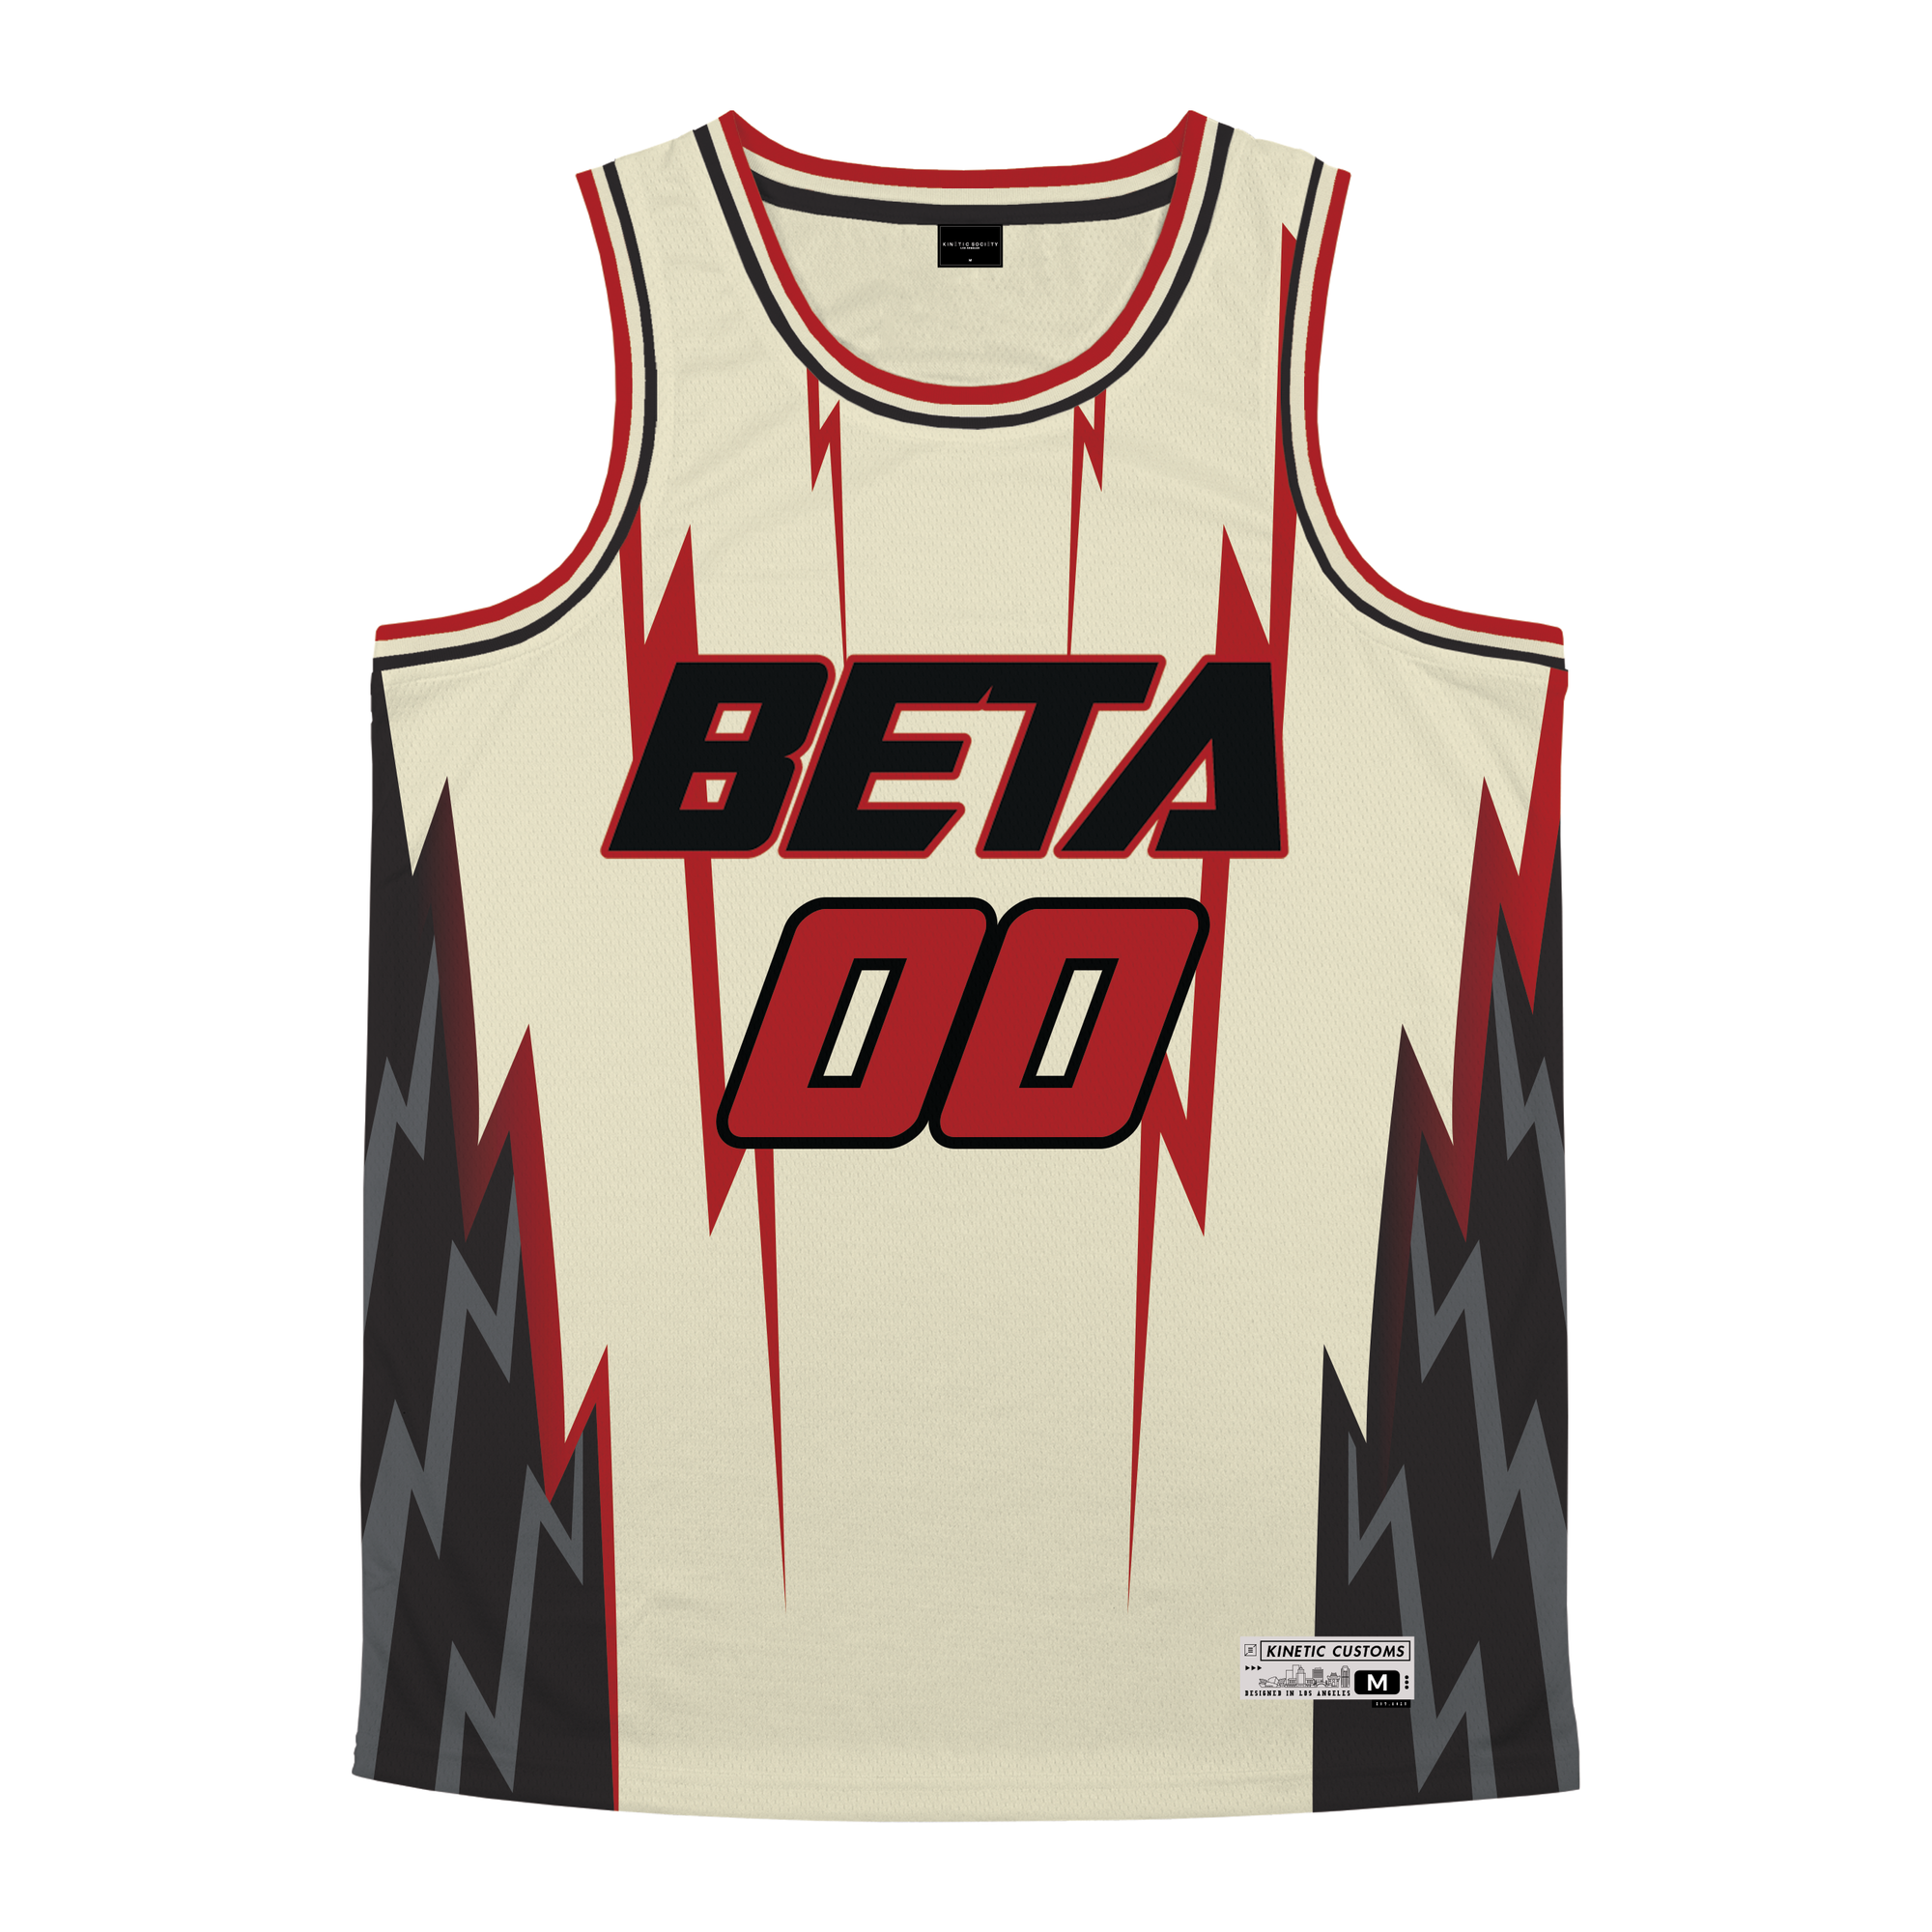 Beta Theta Pi - Rapture Basketball Jersey